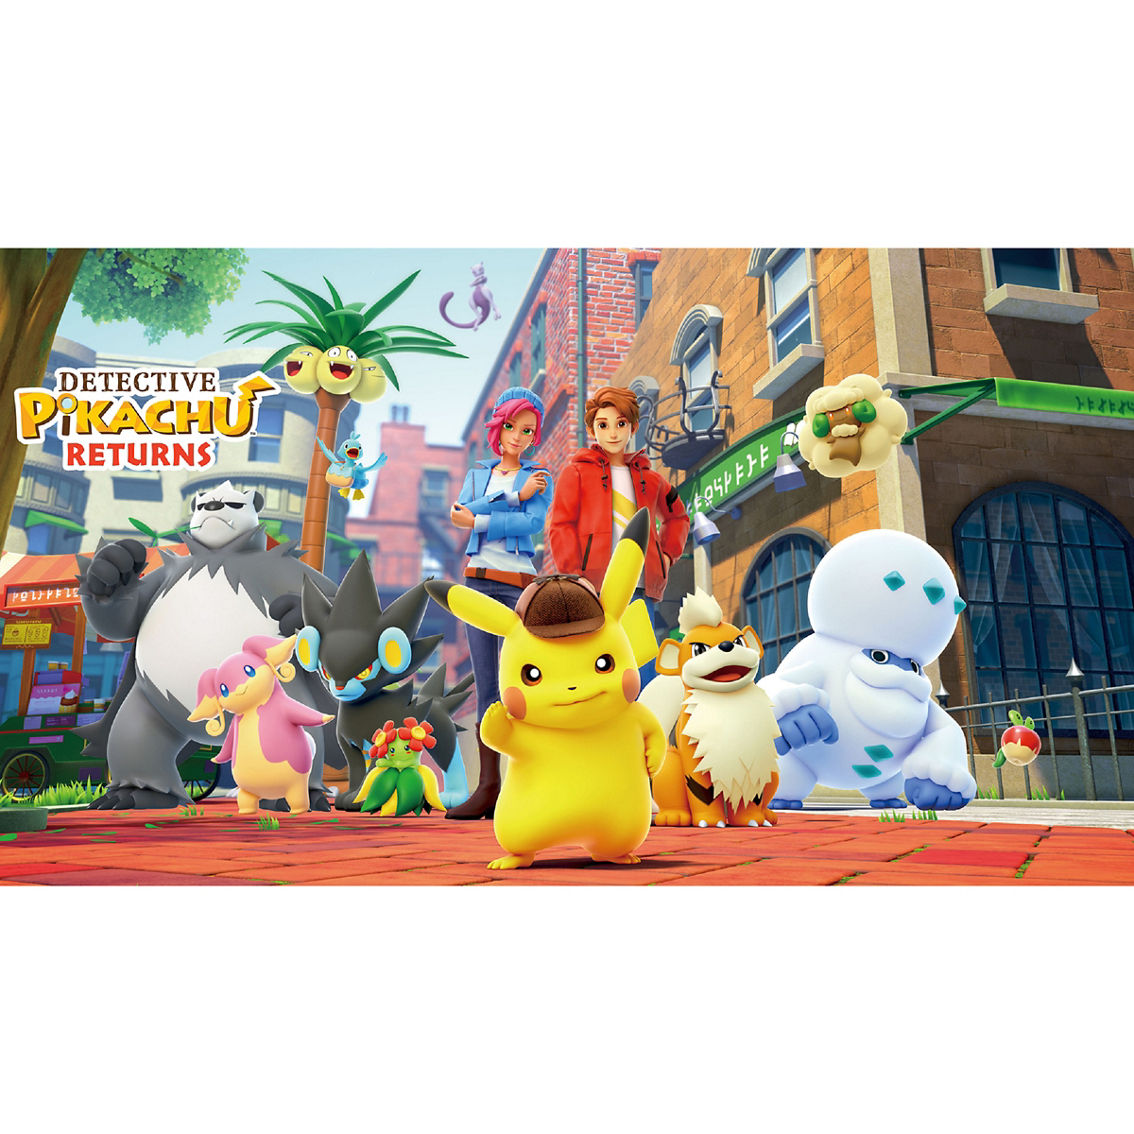 Detective Pikachu Returns (Nintendo Switch) - Image 2 of 2